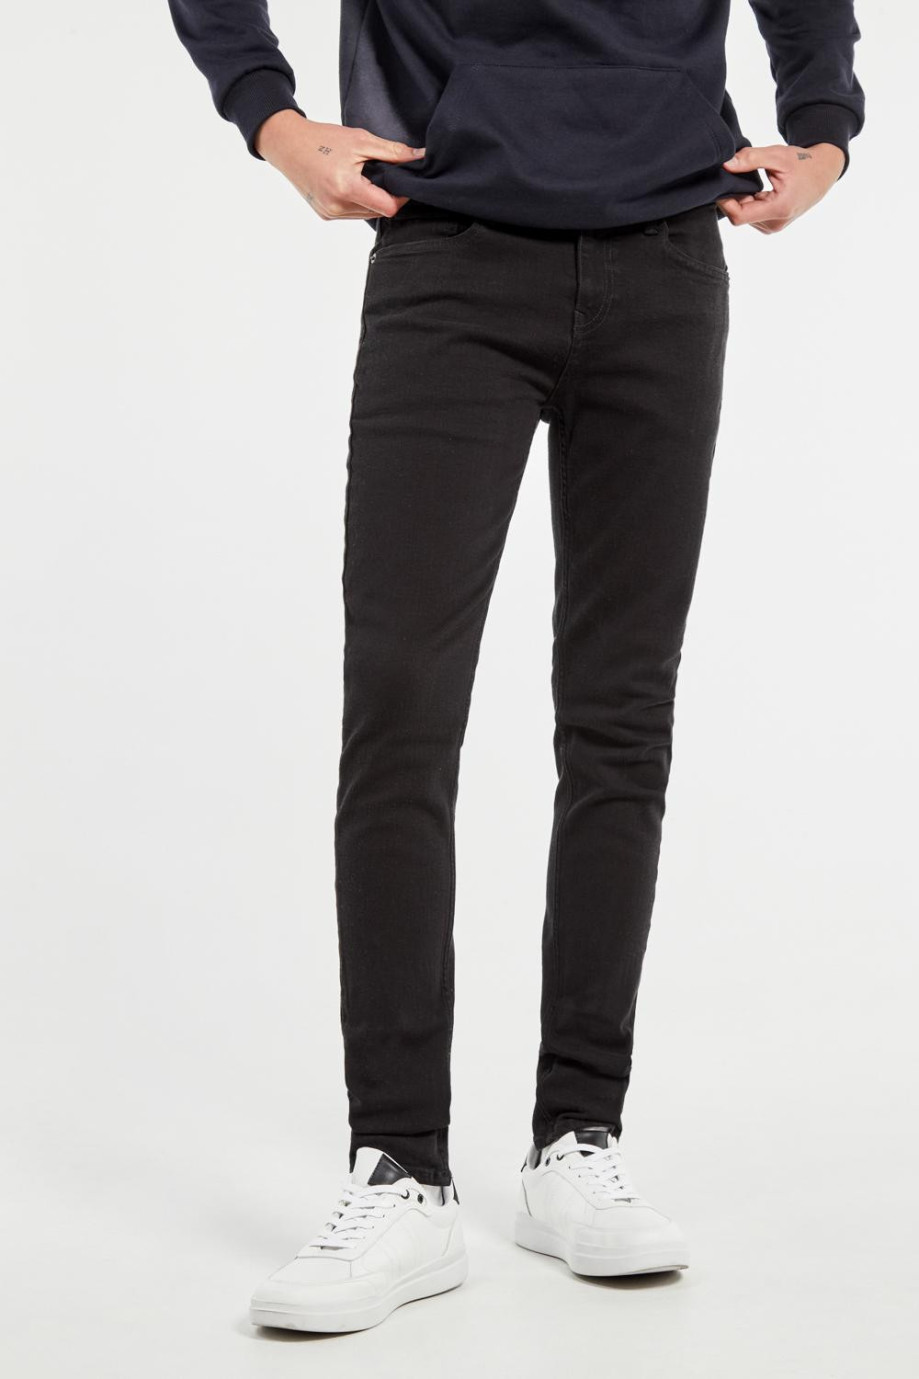 Jean negro súper skinny con bolsillos, tiro bajo y ajuste ceñido